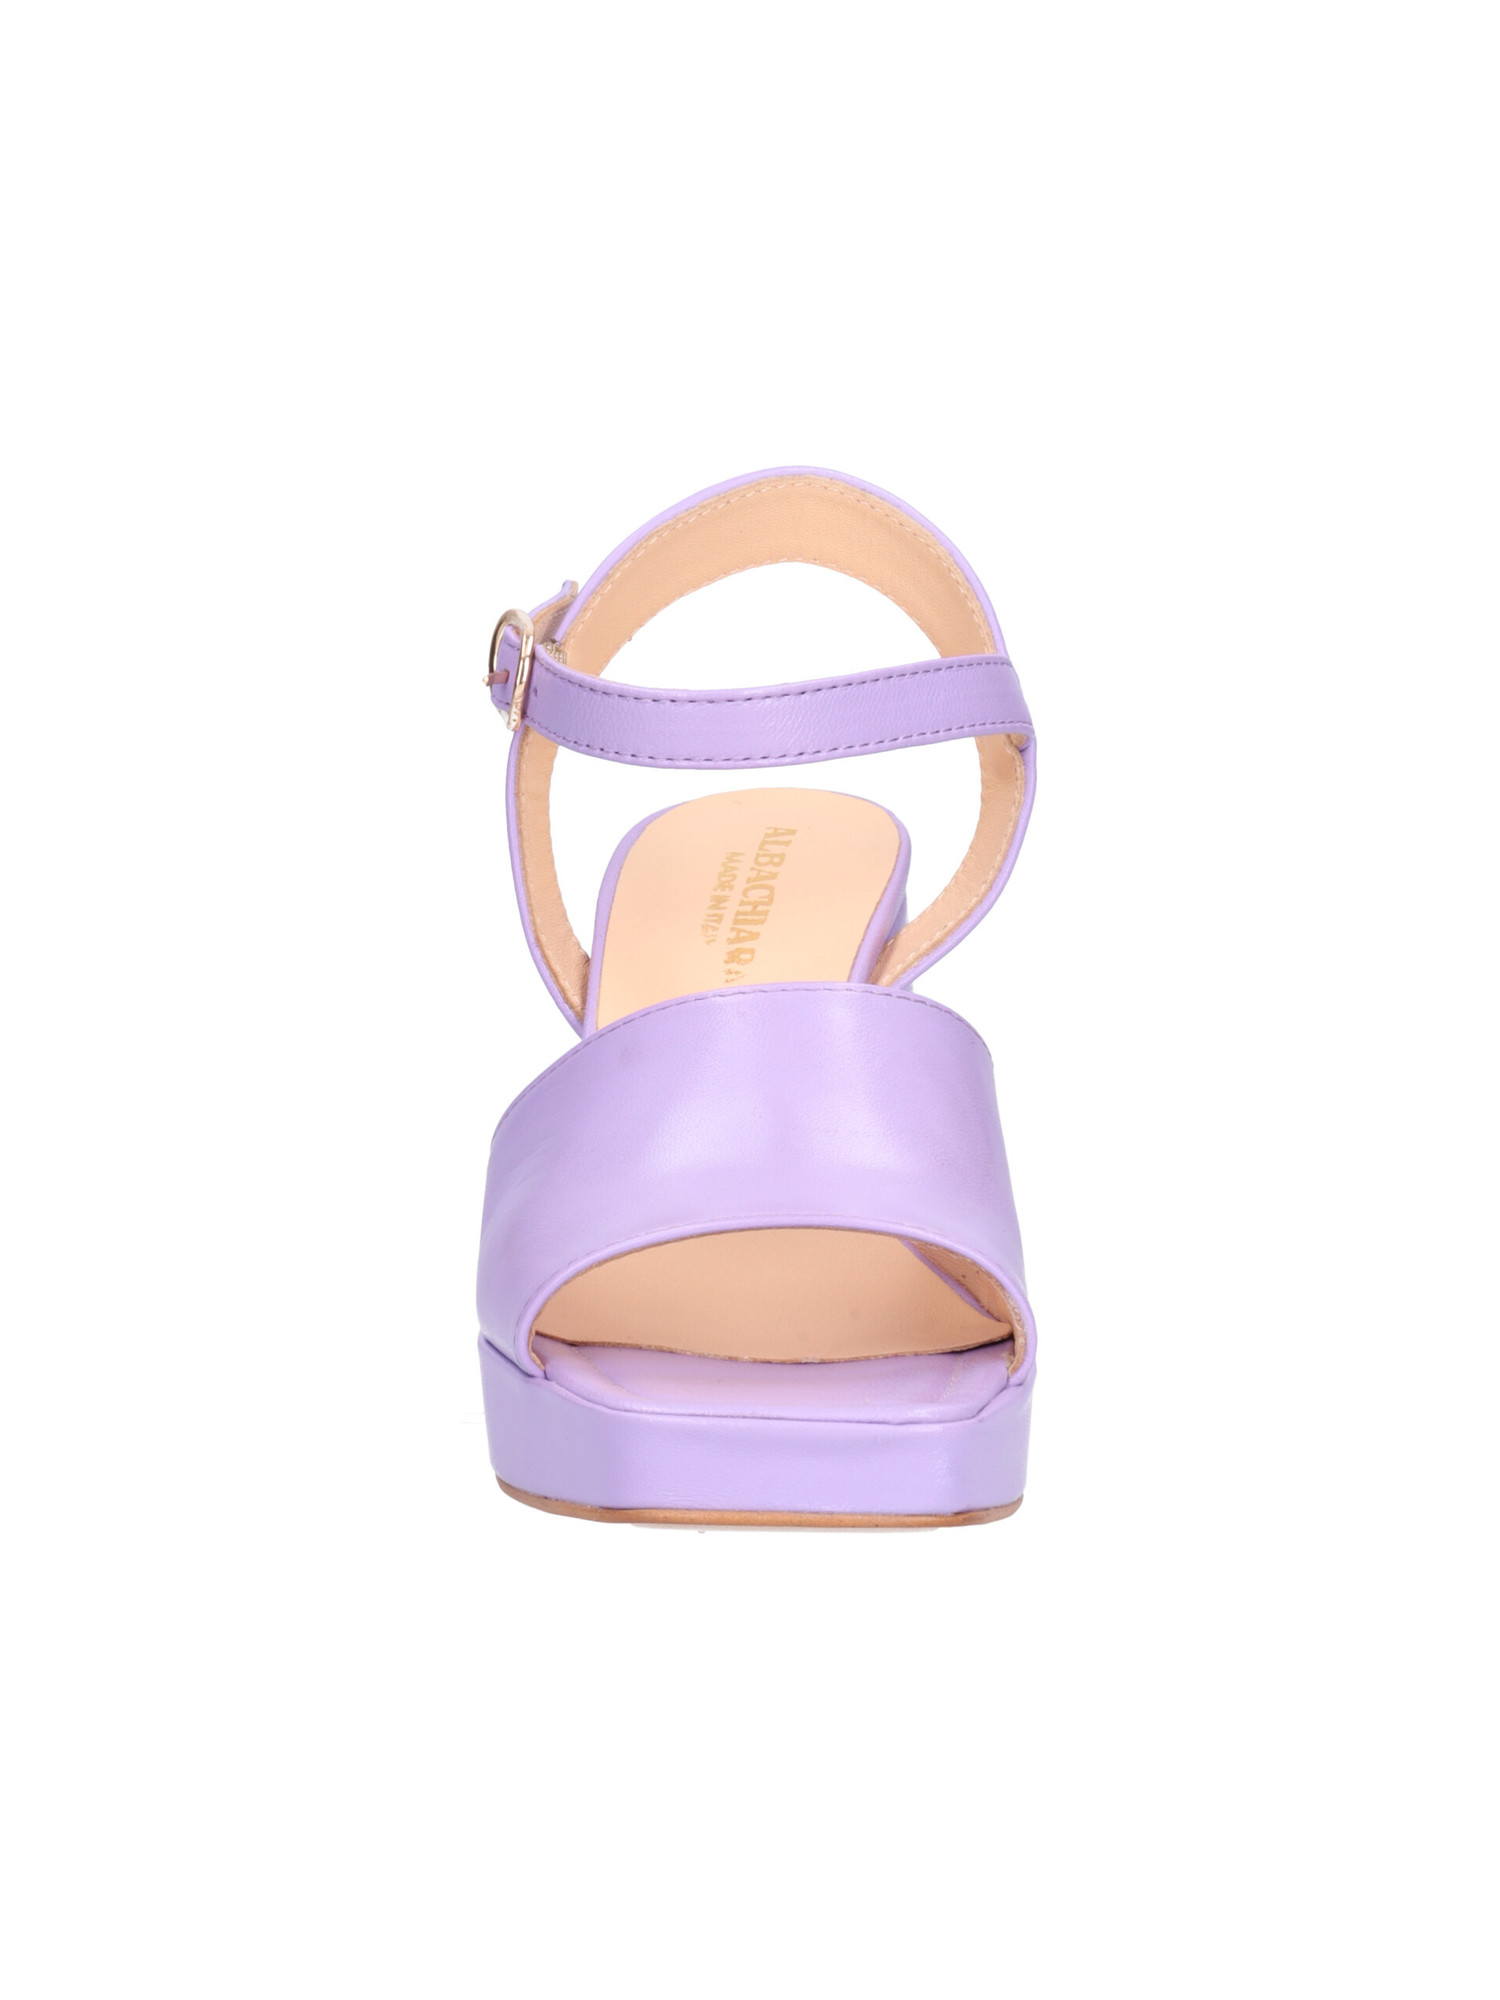 Sandalo tacco largo Albachiara da donna lilla | Liviana Calzature